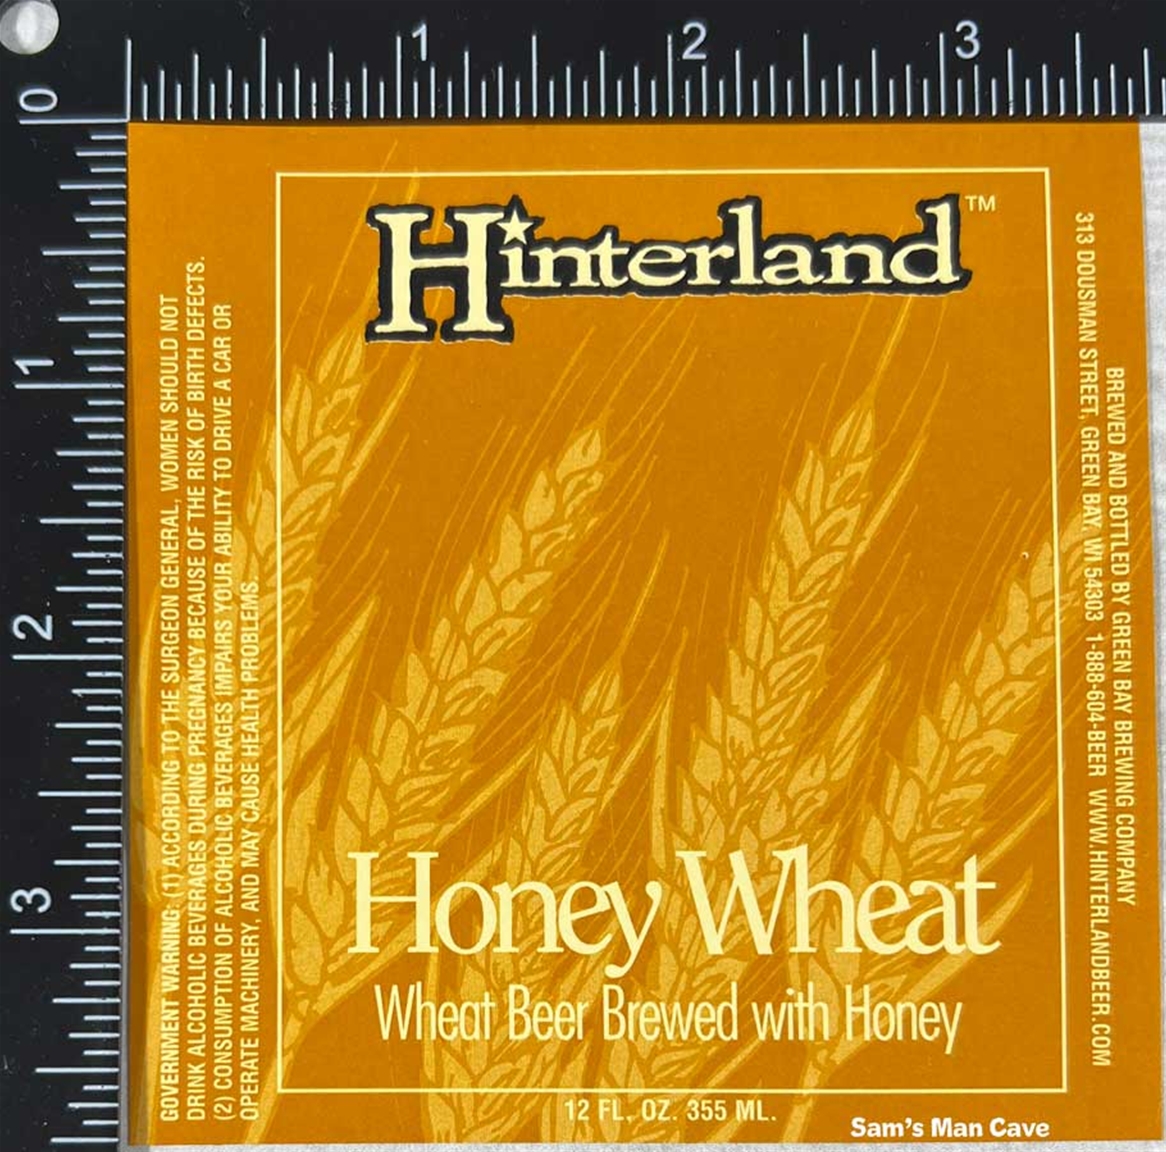 Hinterland Honey Wheat Beer Label